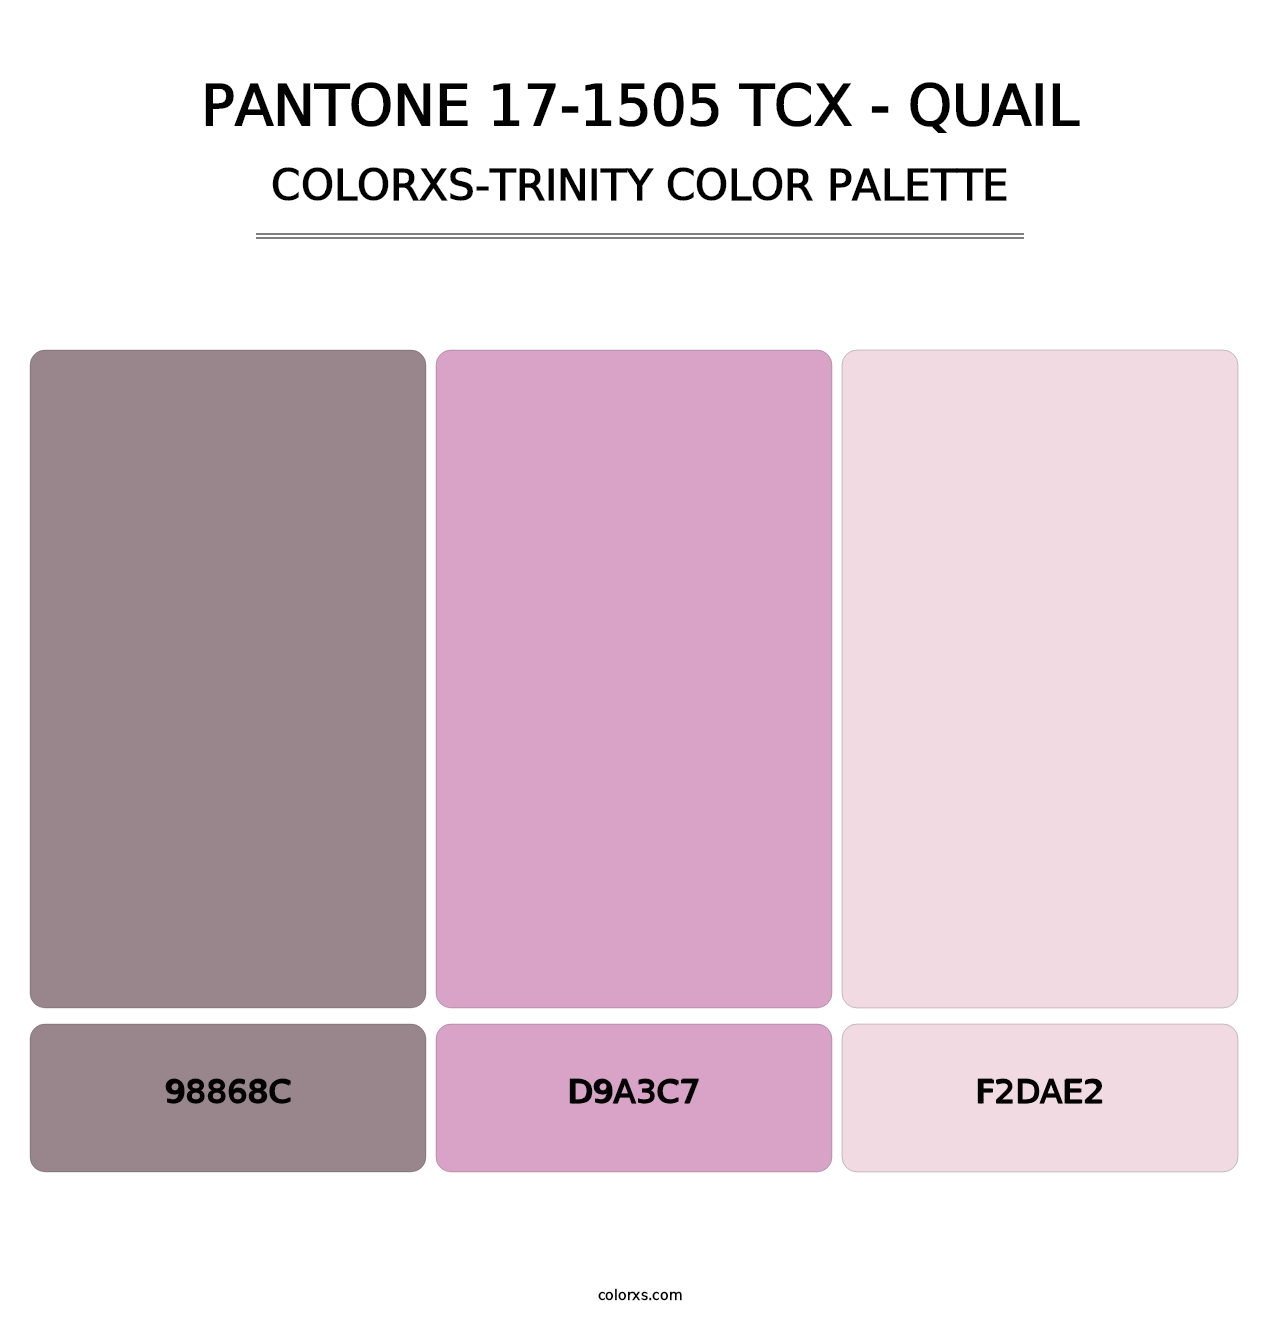 PANTONE 17-1505 TCX - Quail - Colorxs Trinity Palette